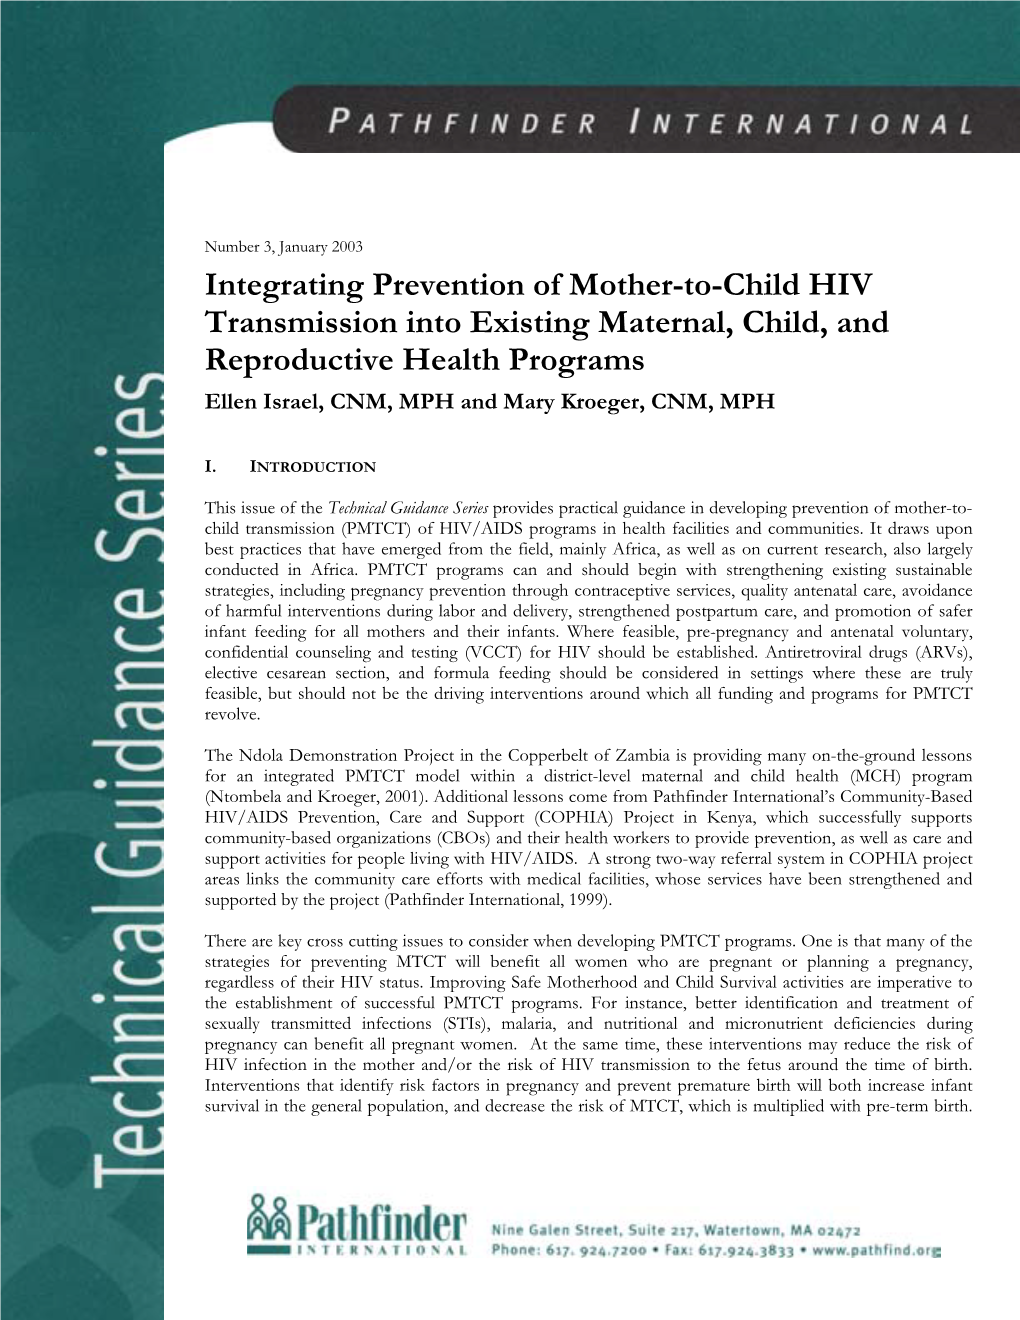 Integration of Mother-To-Child Transmission